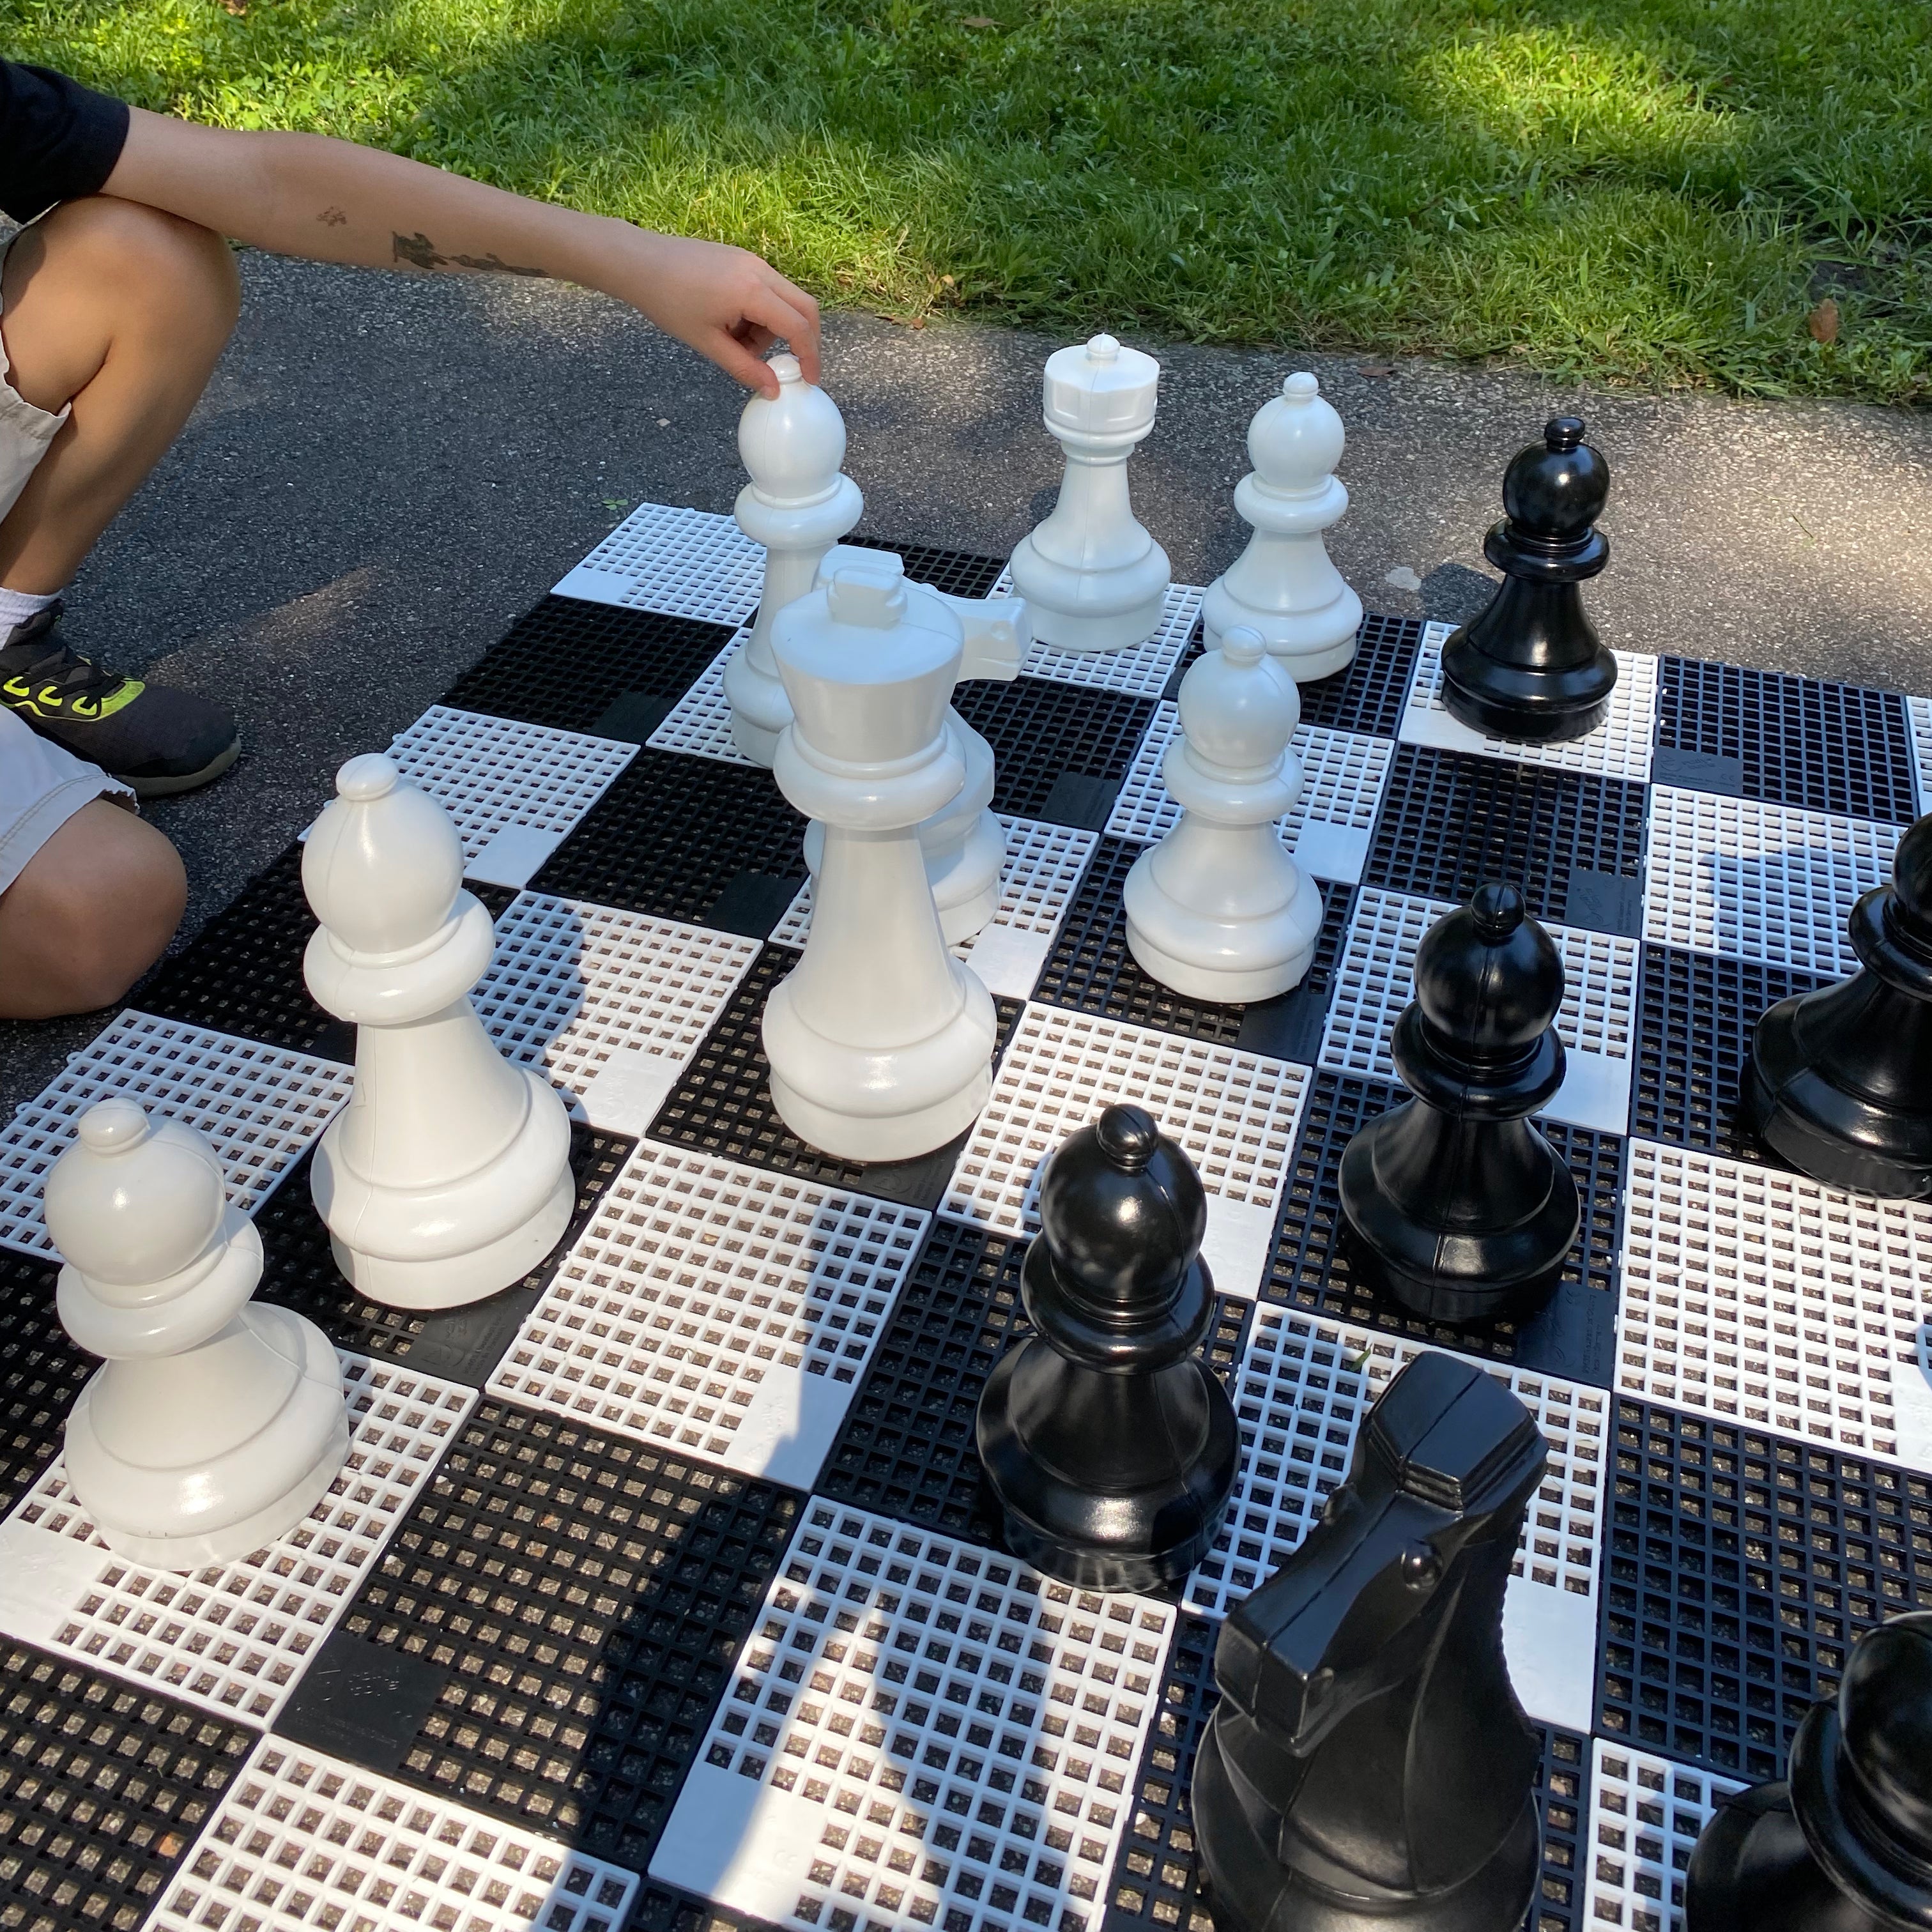 Outdoor Chess Set Canada